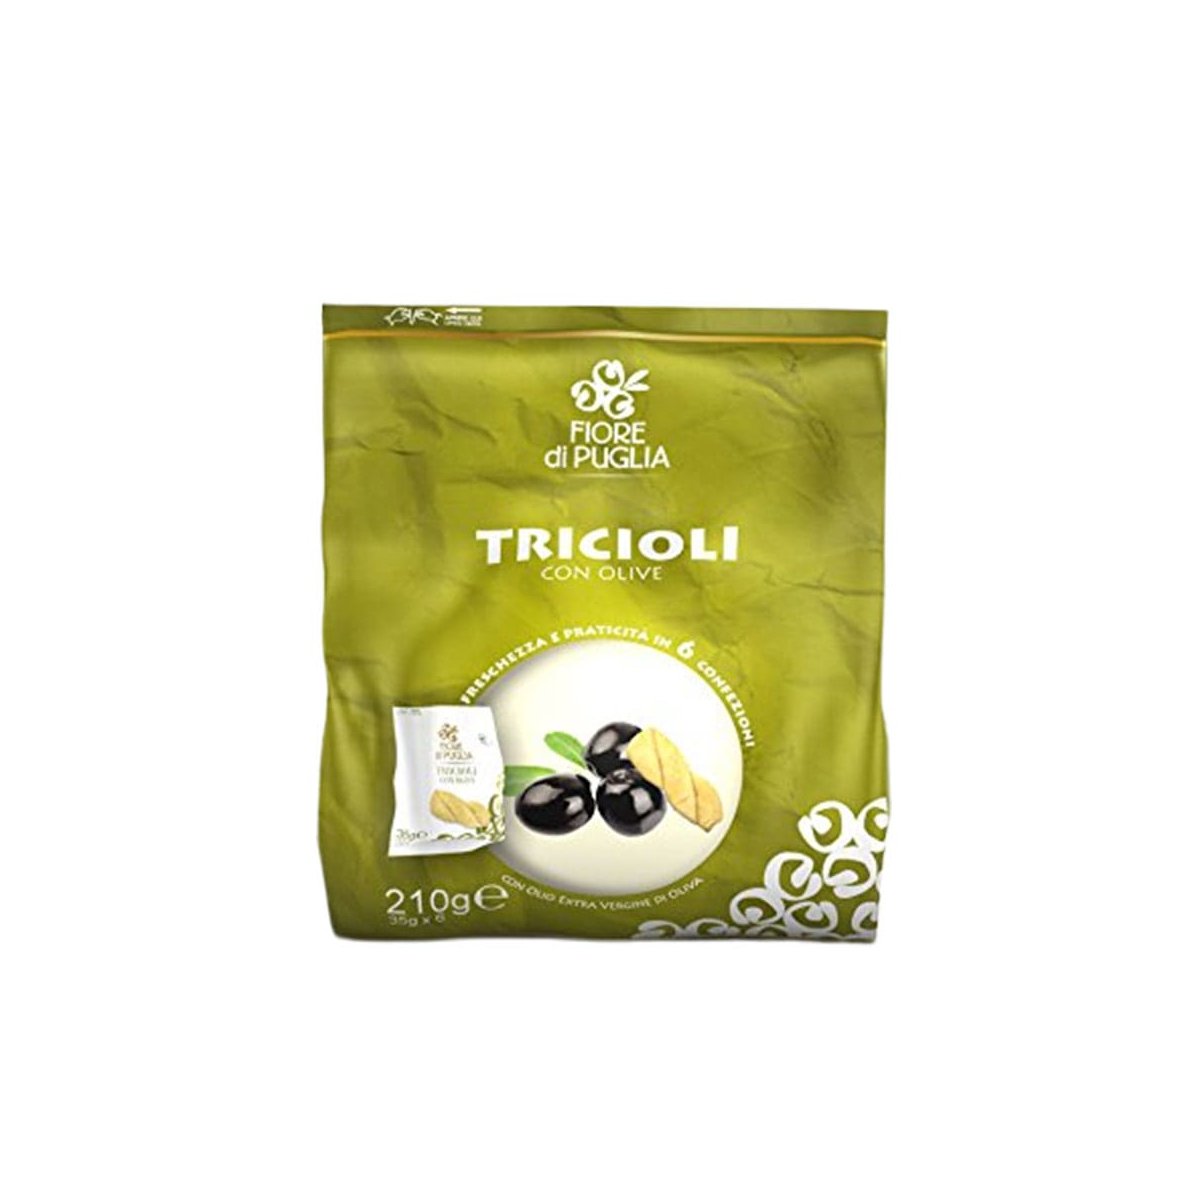 Multipack - Tricioli alle olive